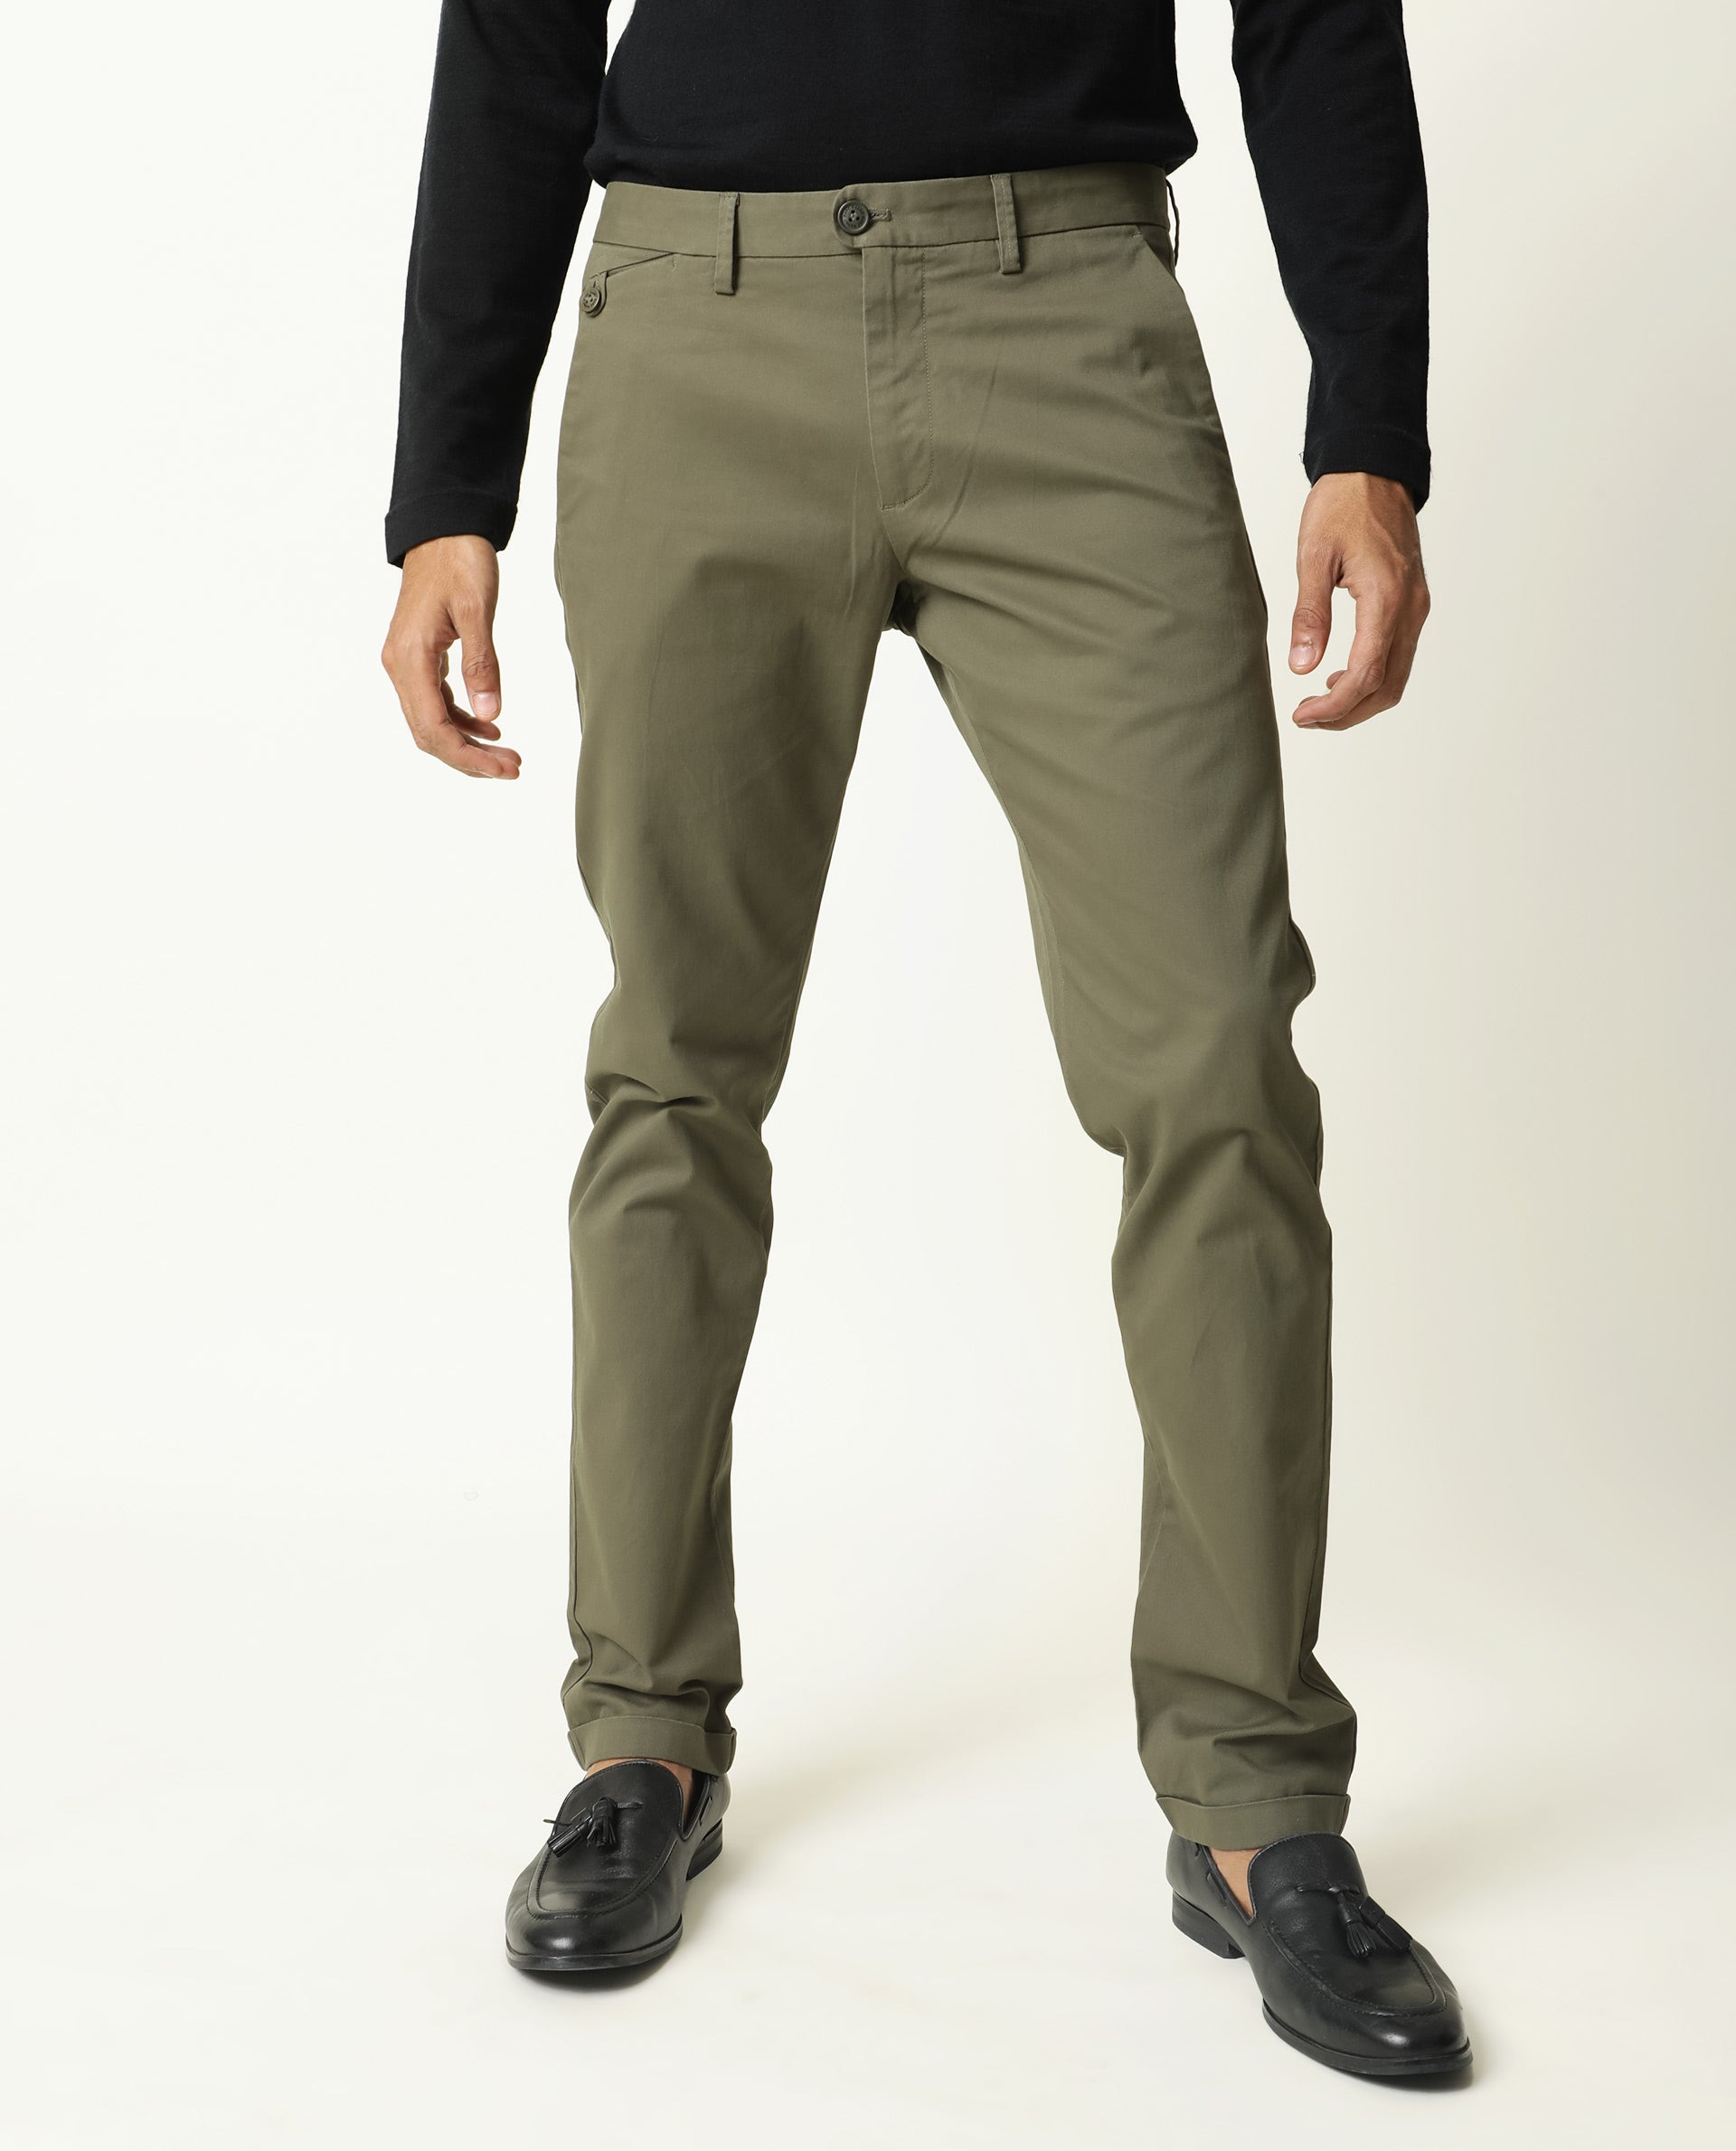 Lands' End Men's Pants Size 34 Brown Baumwolle Soft Felt-like fabric B4 |  eBay